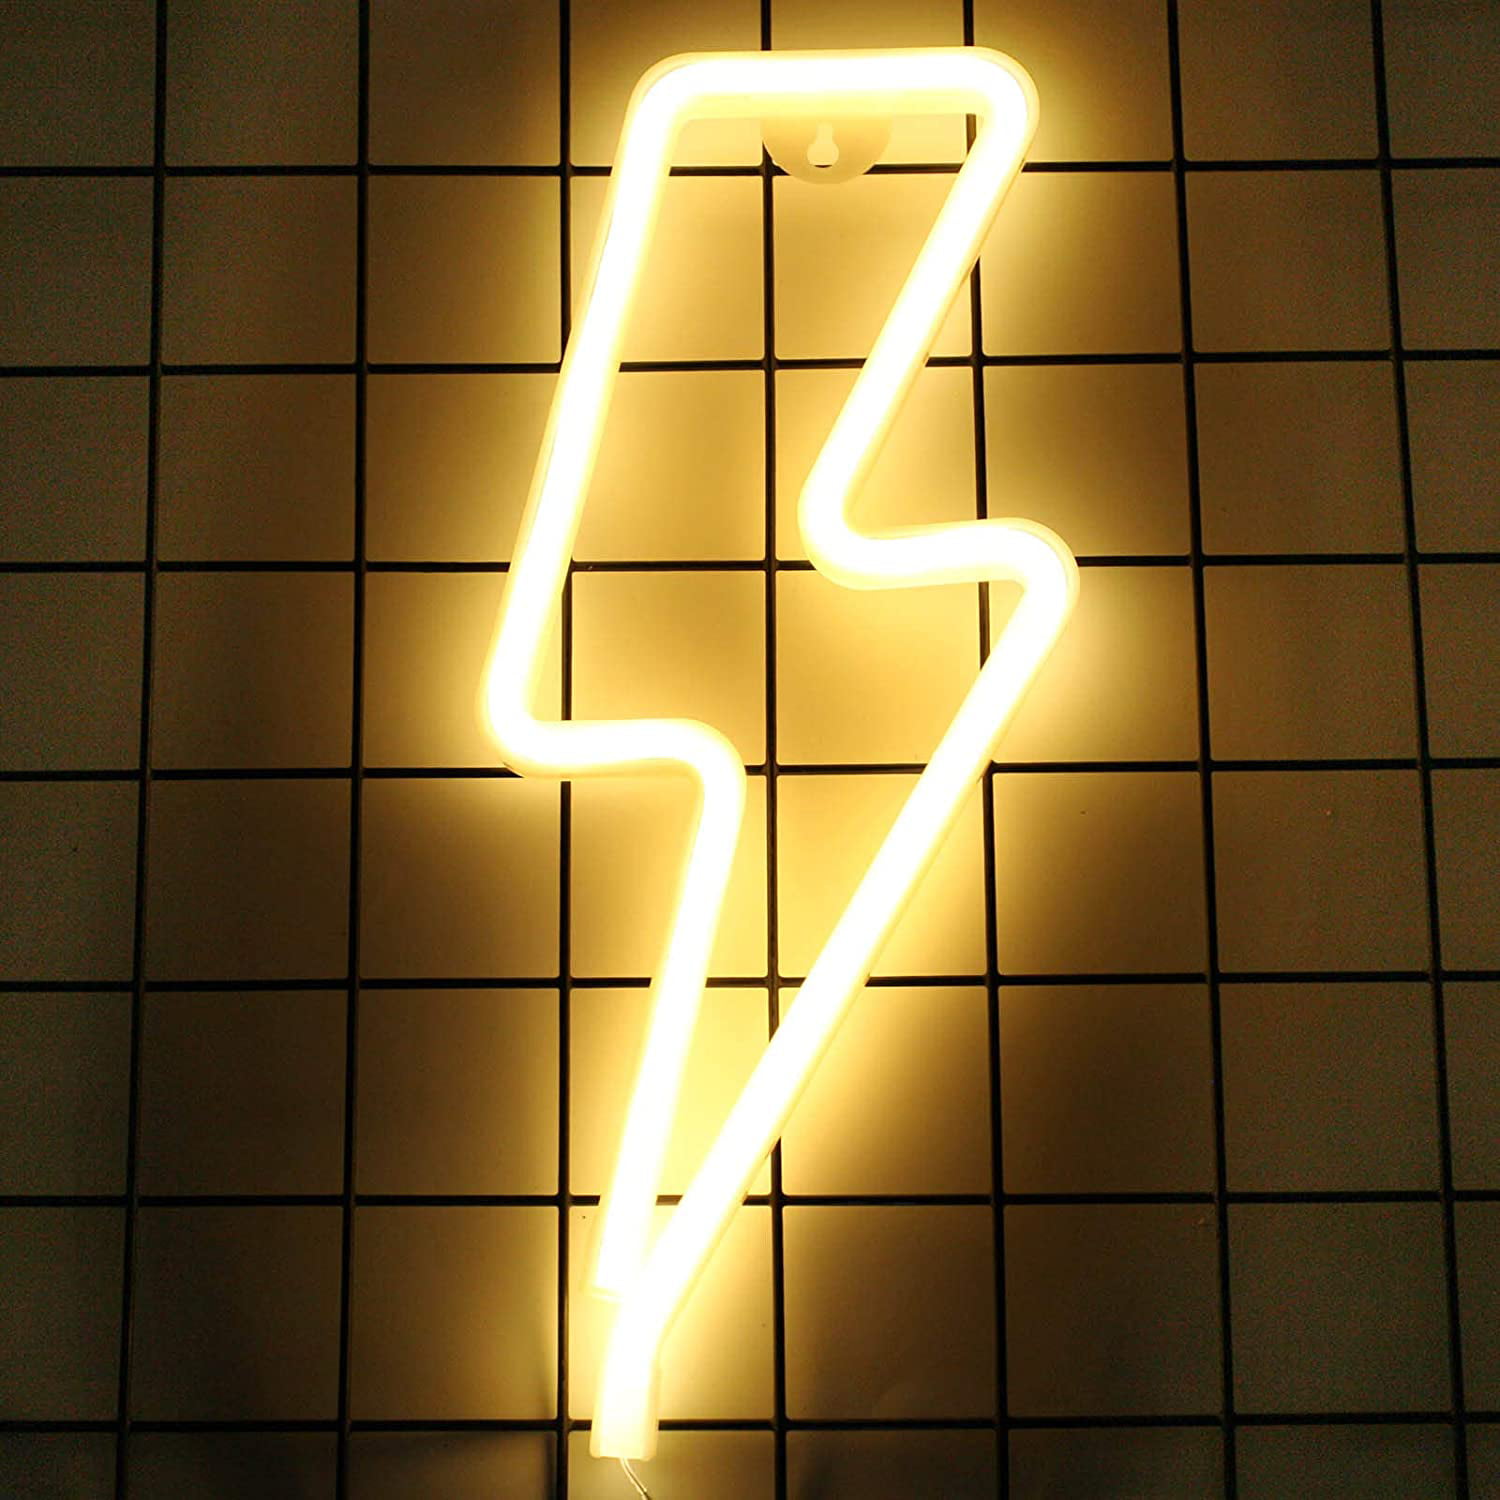 Lightning Bolt Battery Neon Signs Warm White Decorative Lights Wall Decor 